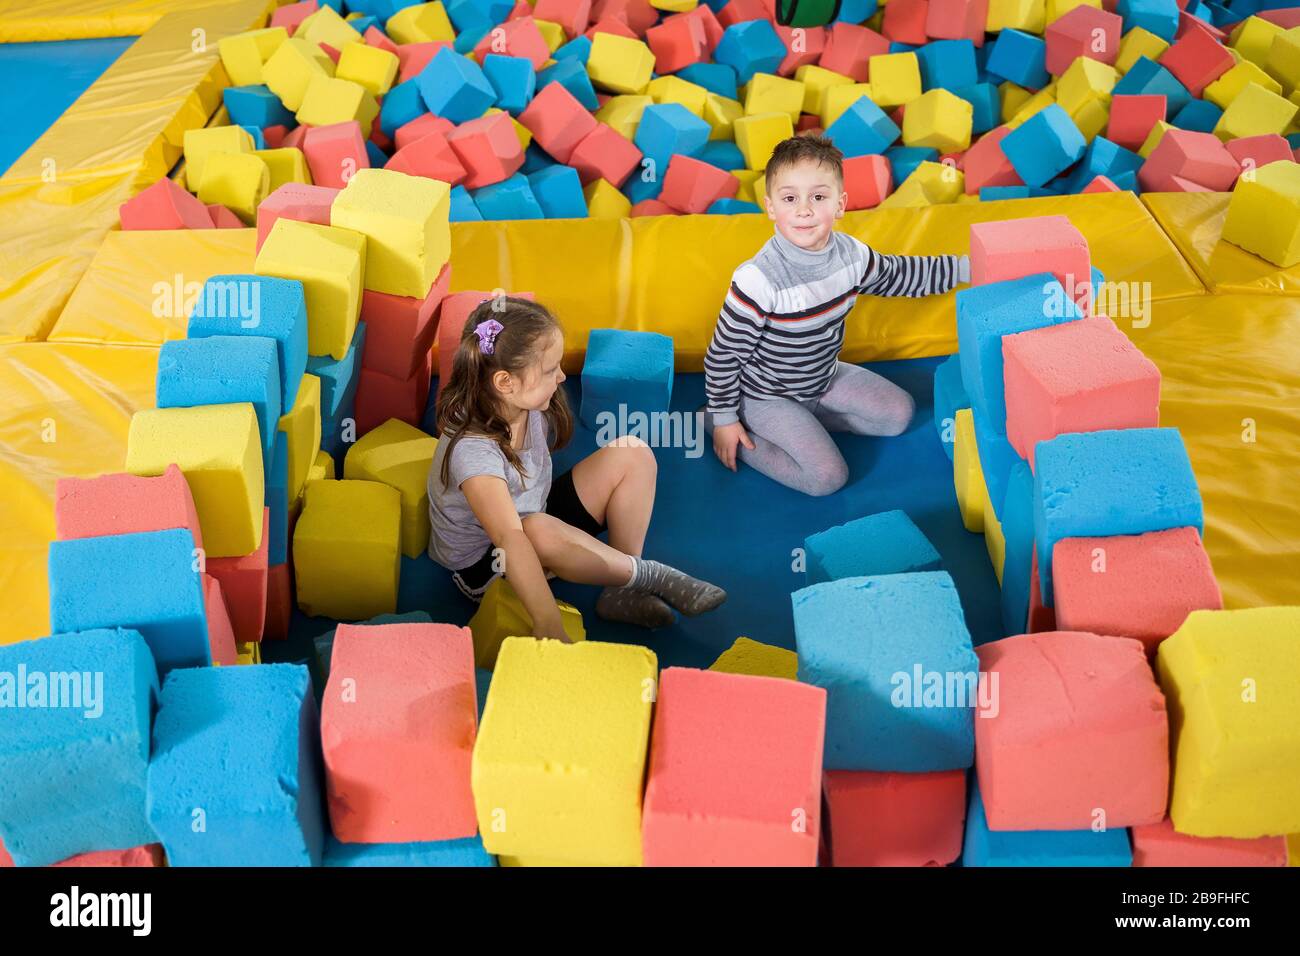 Foam Soft Blocks Playset Climbing Indoor Playground Children Kid Child Fun Play 